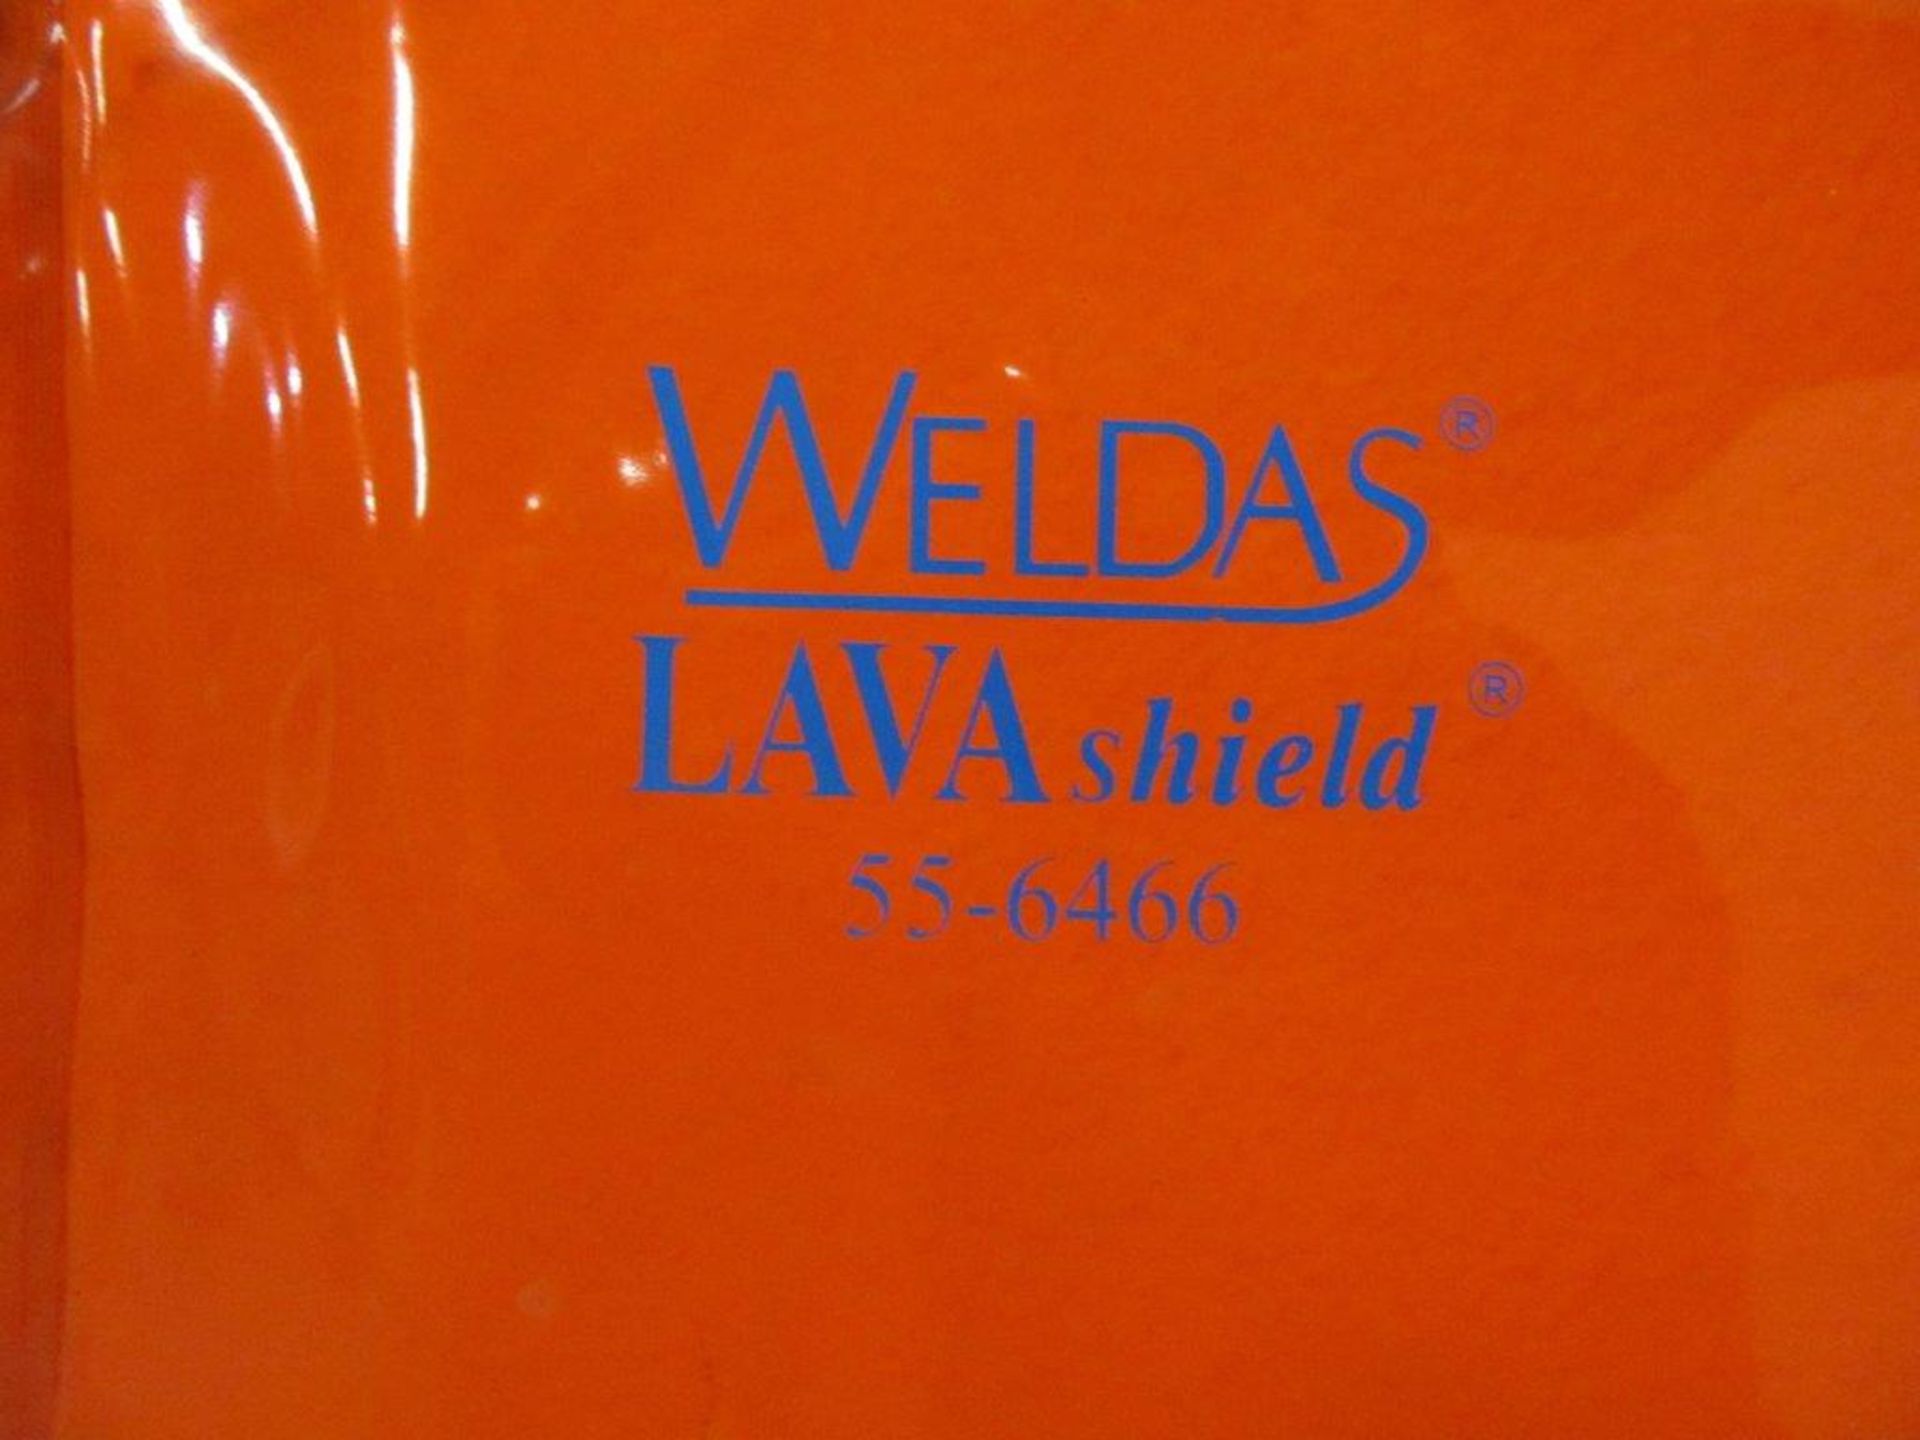 WELDING CURTIAN, WELDAS LAVA SHIELD #55-6466 - Image 2 of 2